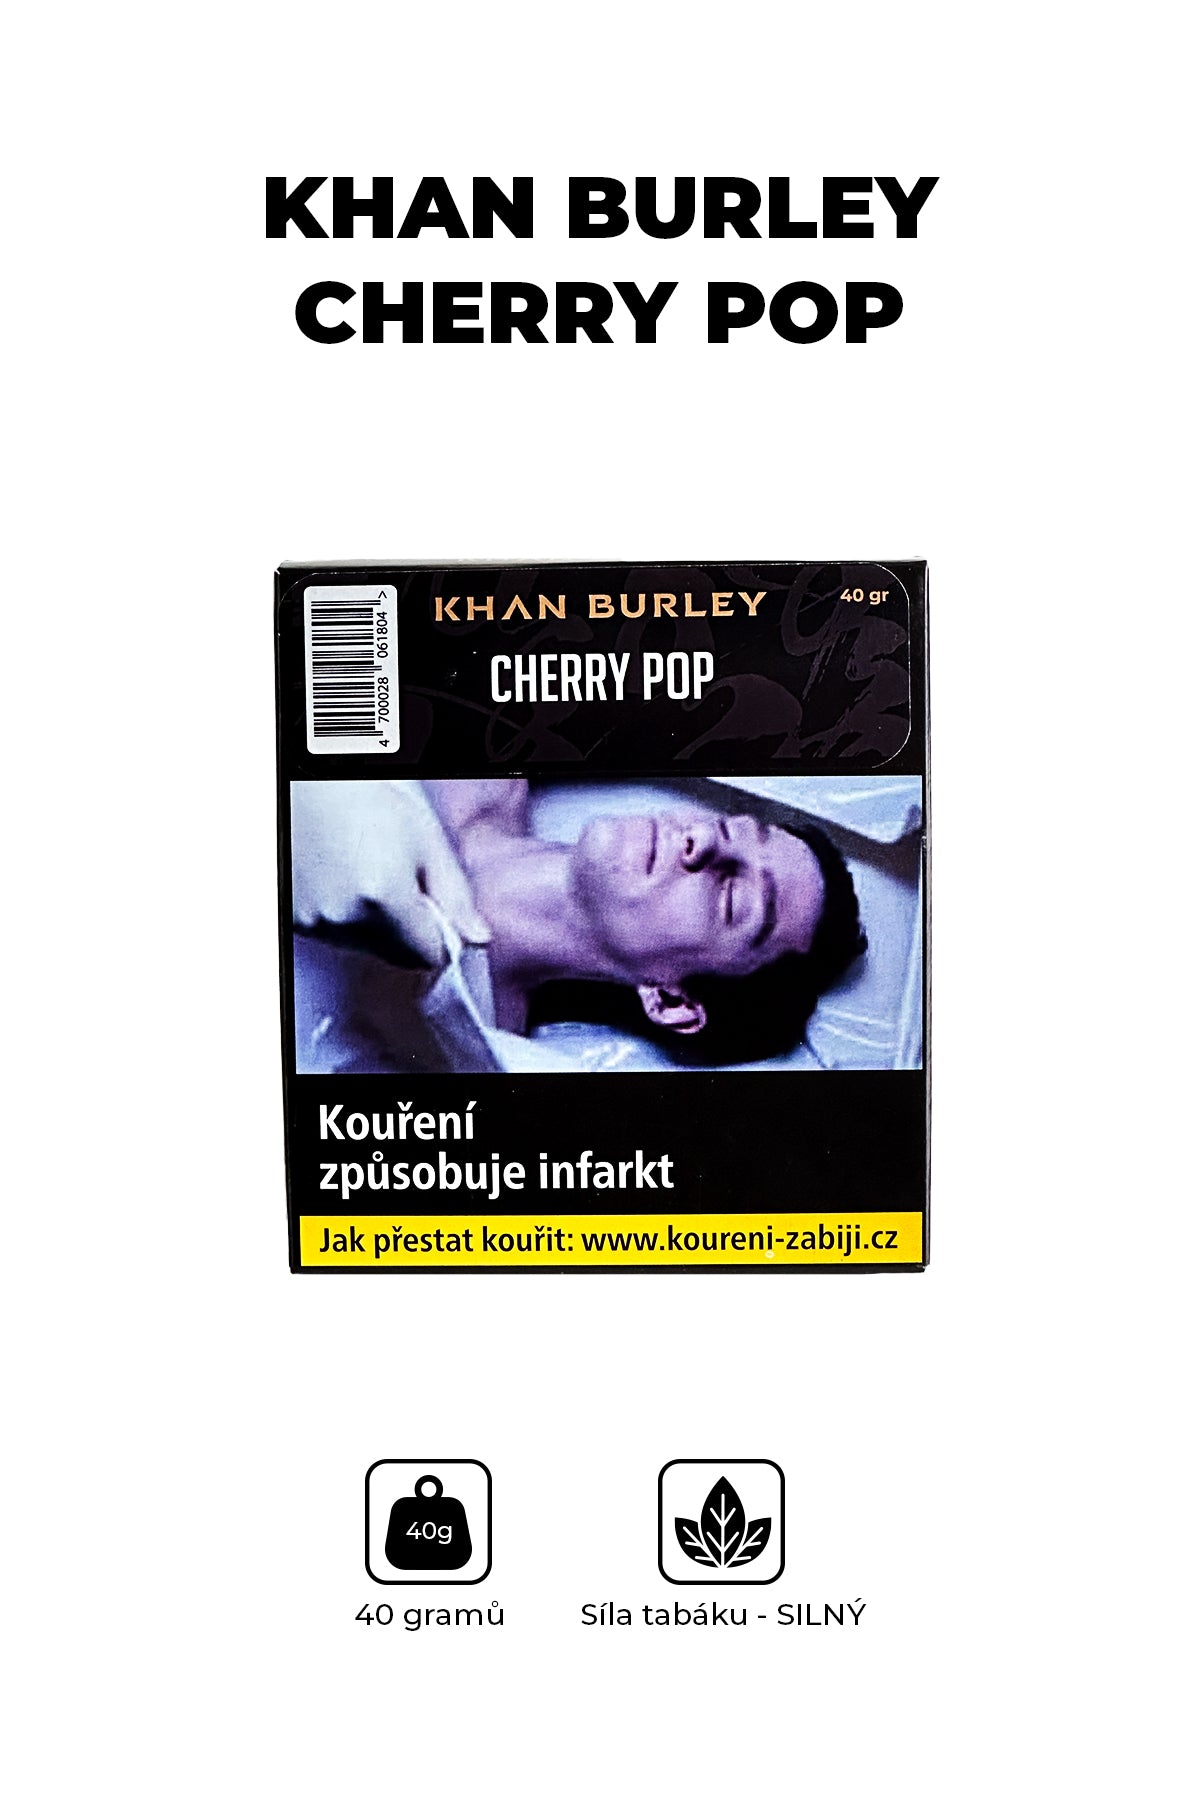 Tabák - Khan Burley 40g - Cherry pop